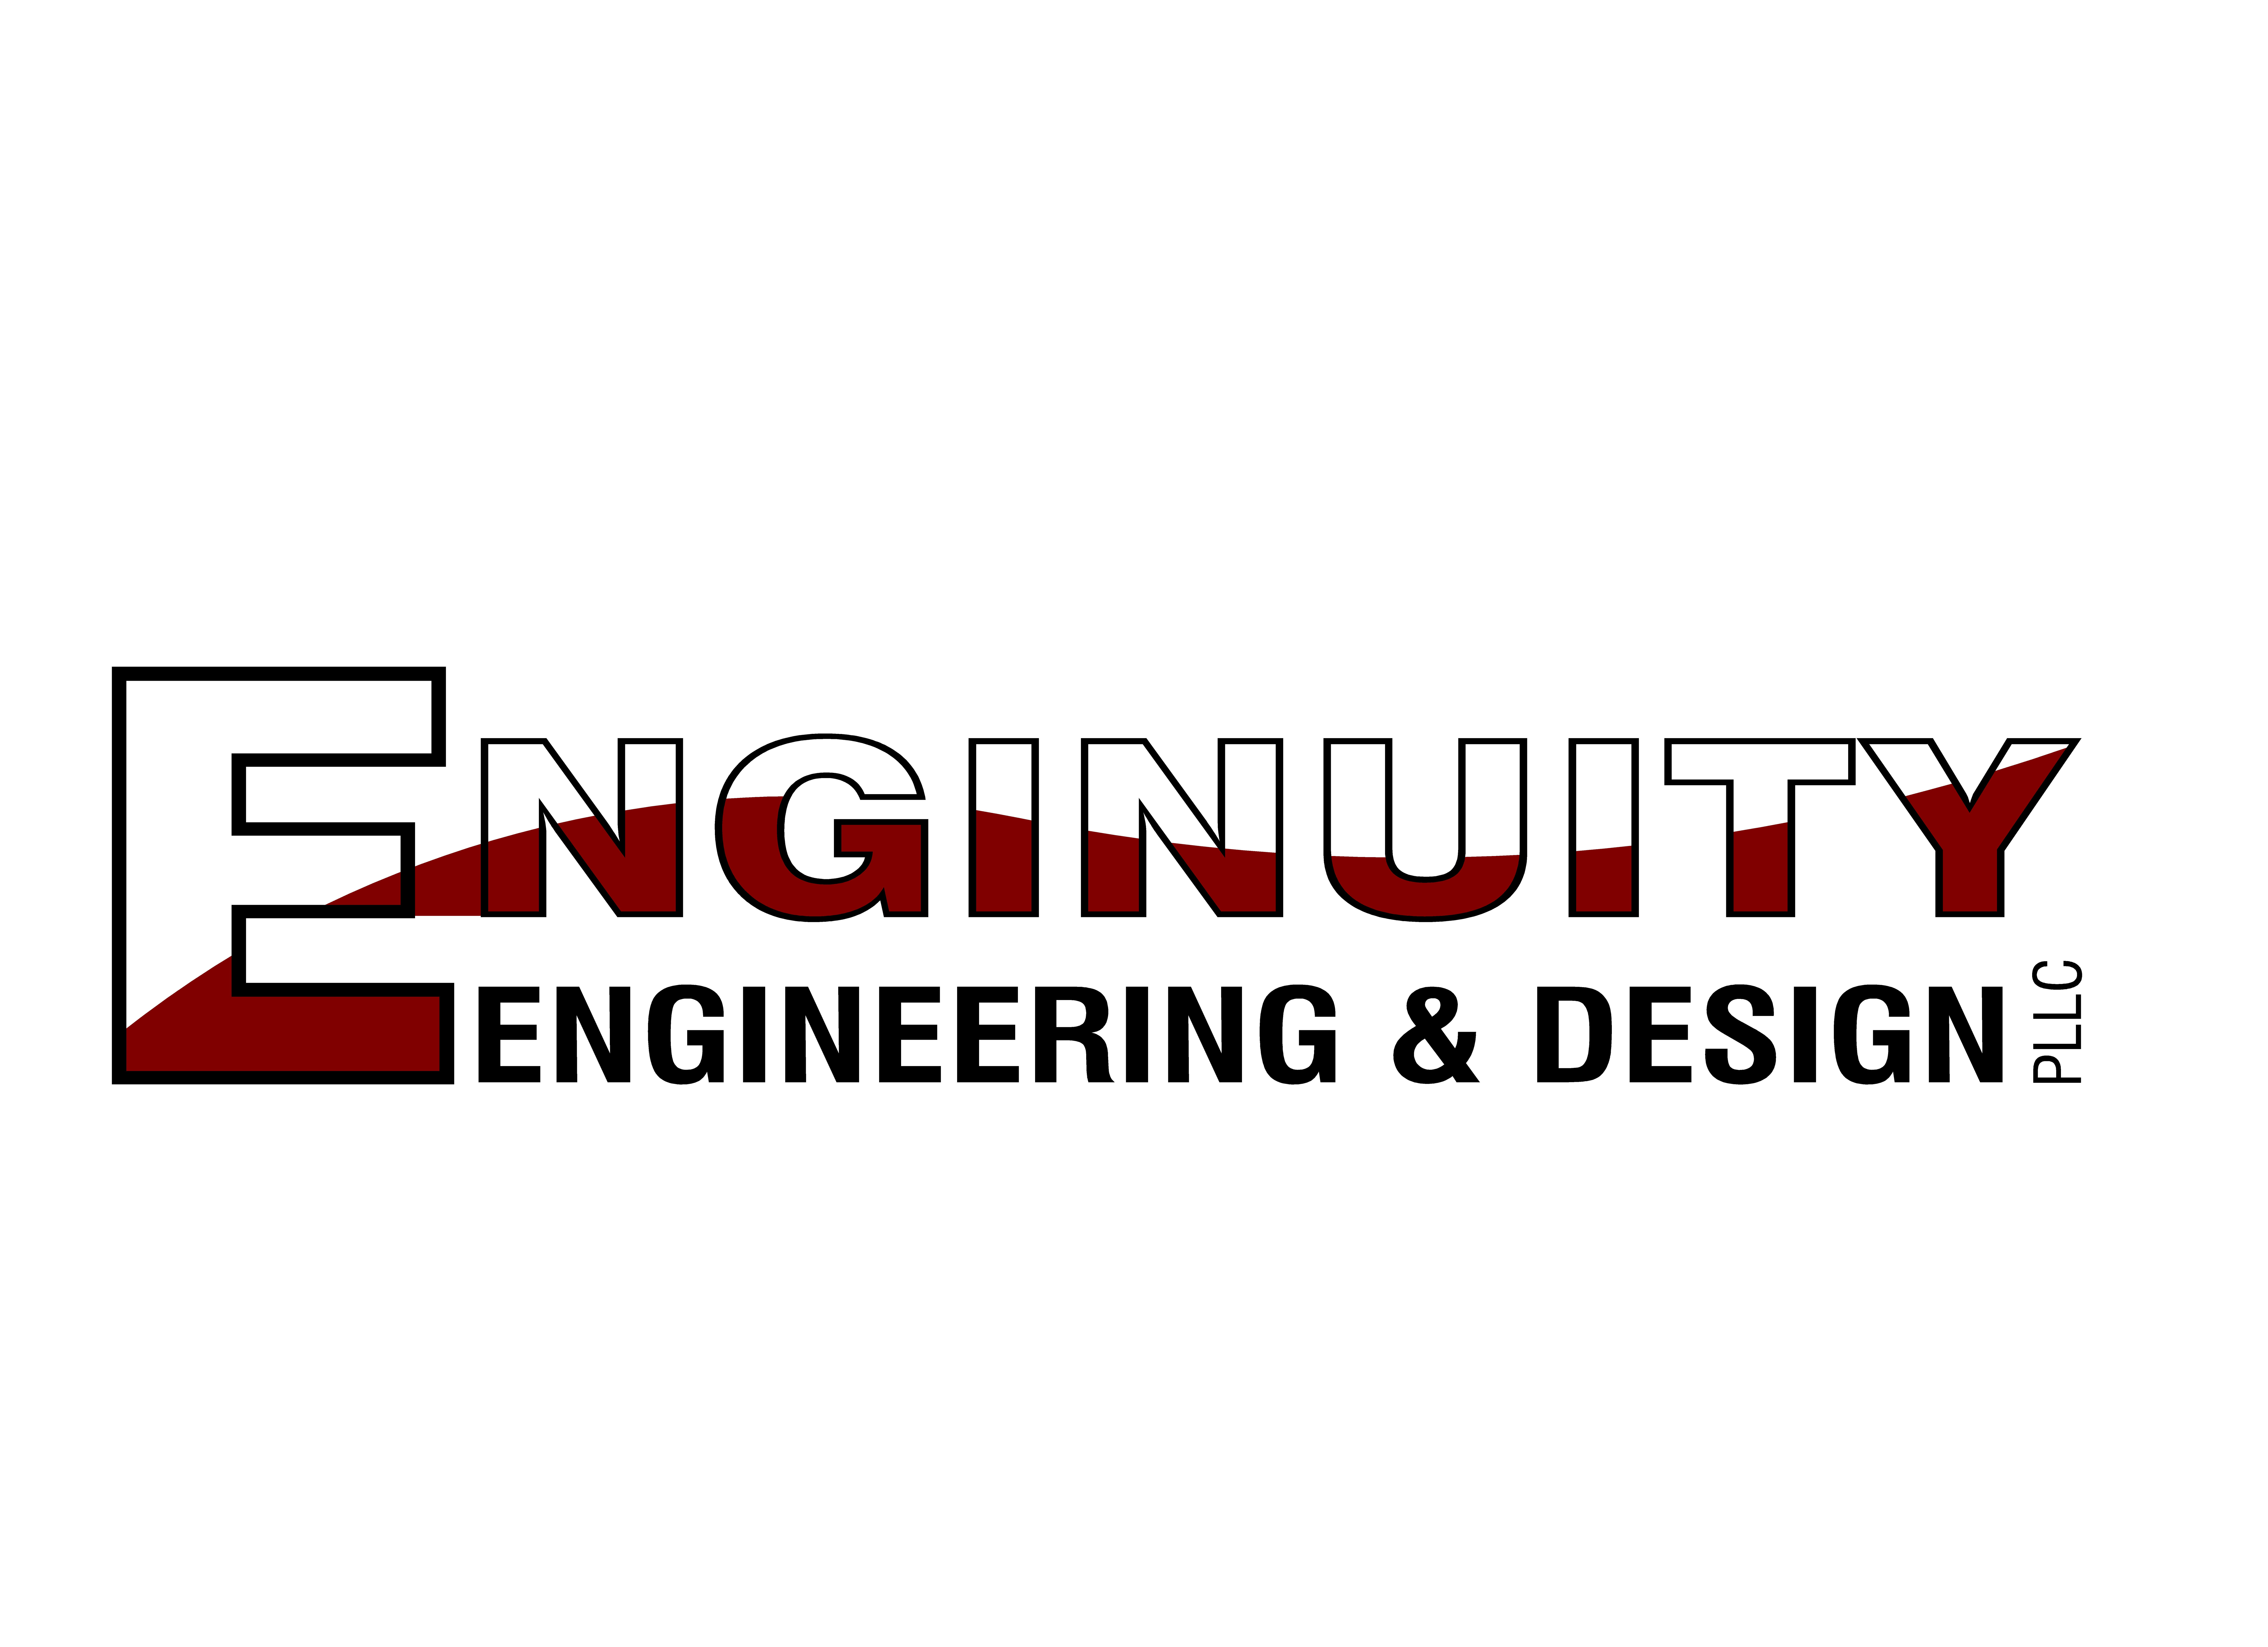 Enginuity Engineering & Design